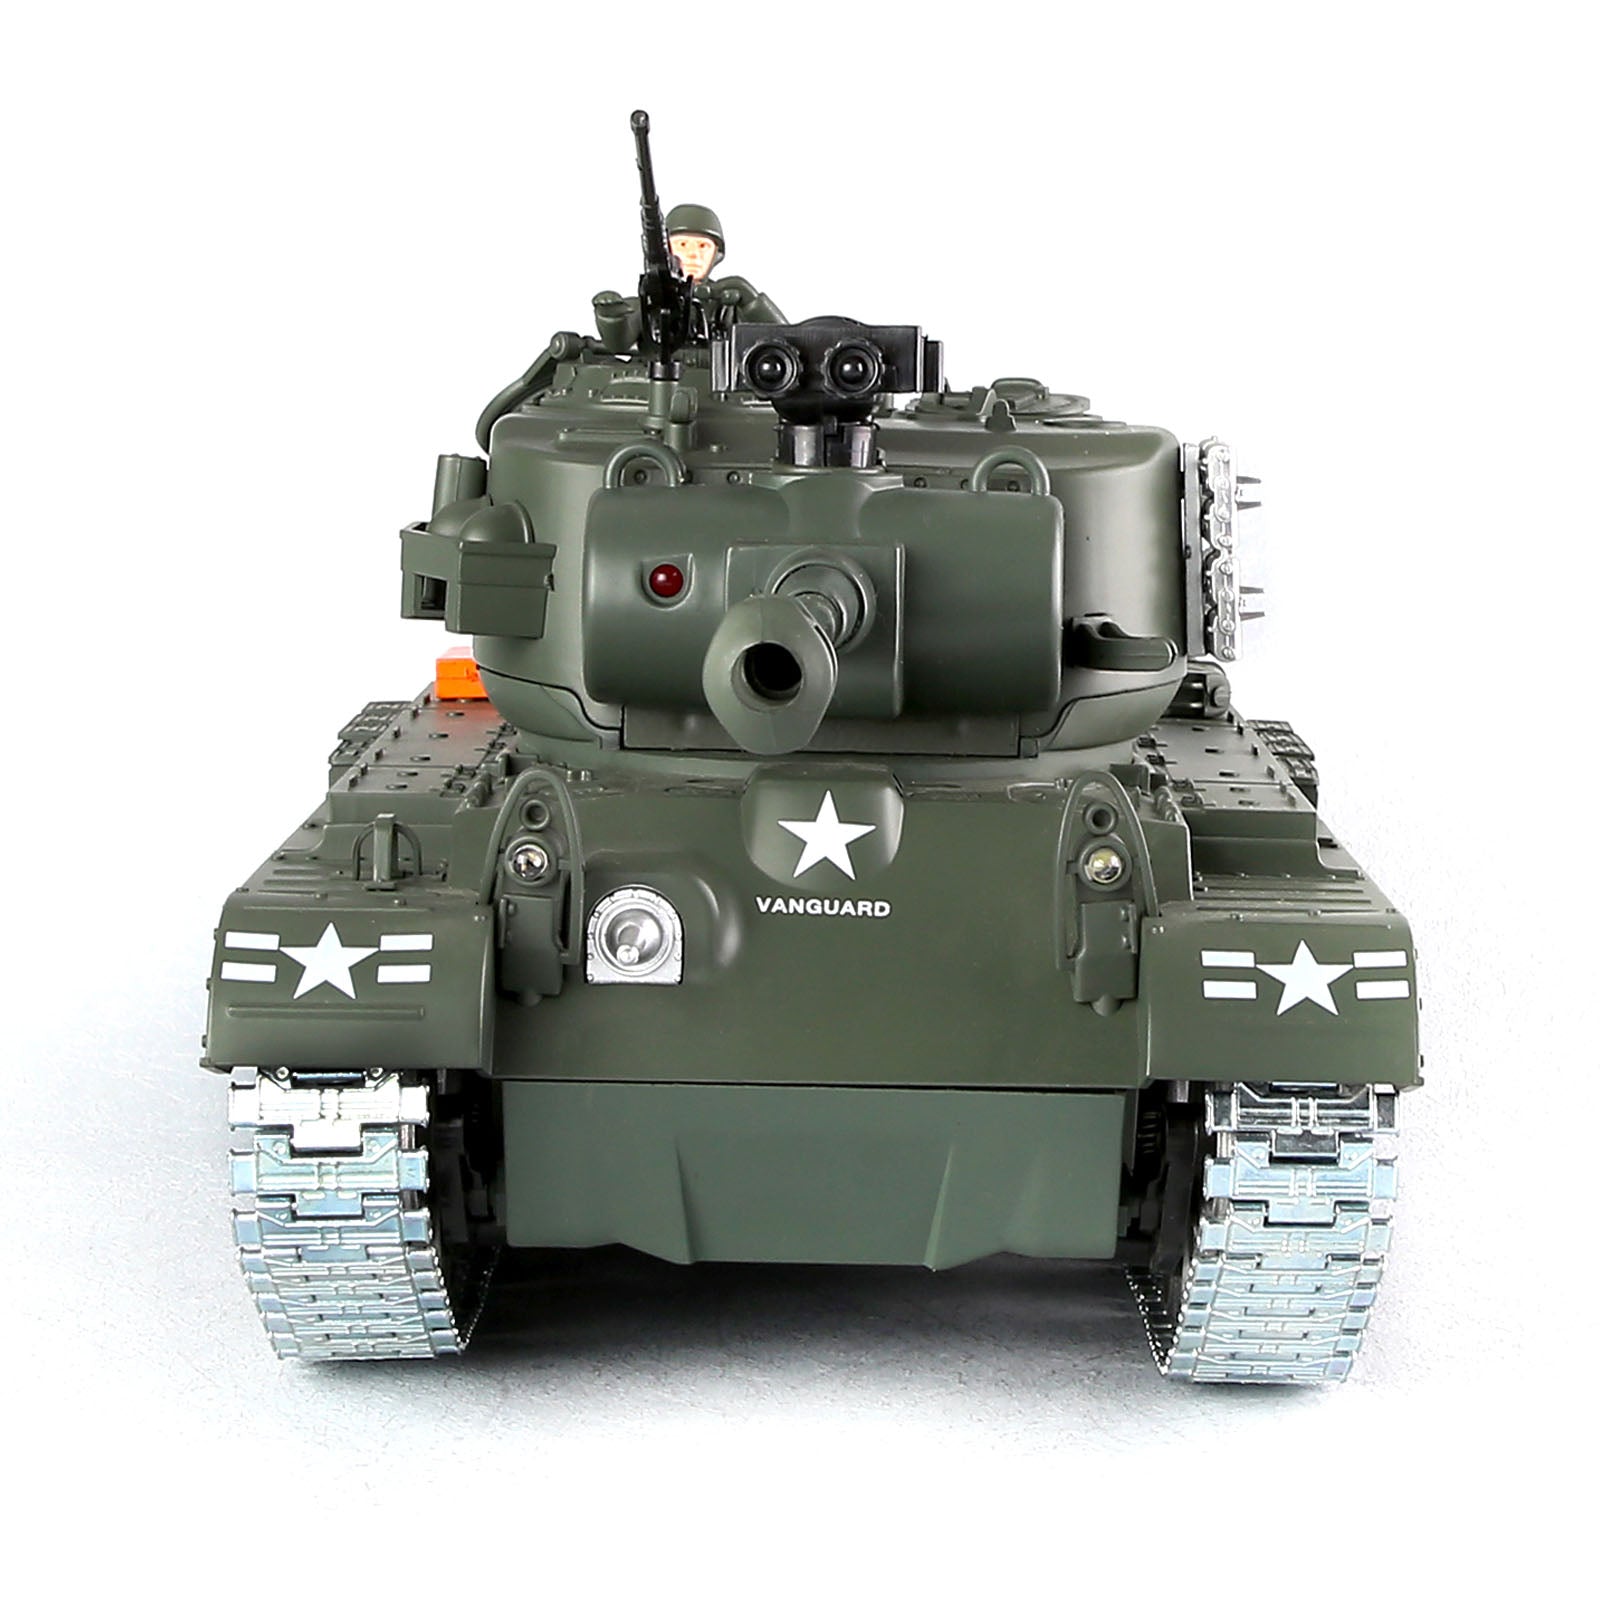 RC Tank US M26 Pershing ZY 814 PRO 1:18 RC Car Metal Track Metal Road Wheels Electric Battle RC Tank Toy